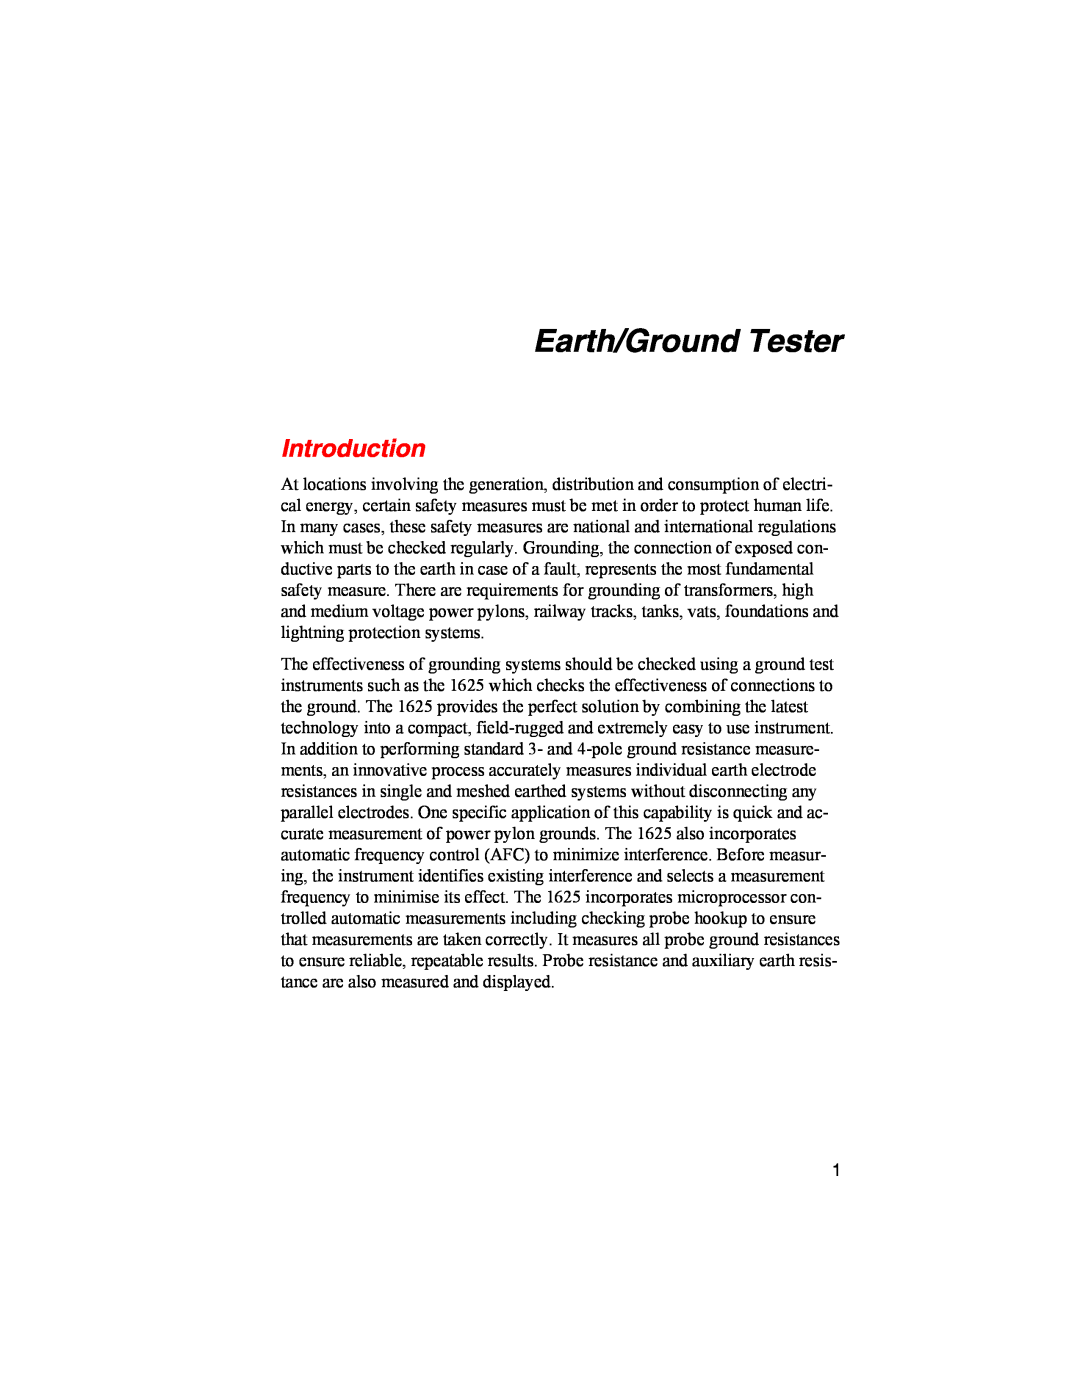 Fluke 1625 user manual Earth/Ground Tester, Introduction 